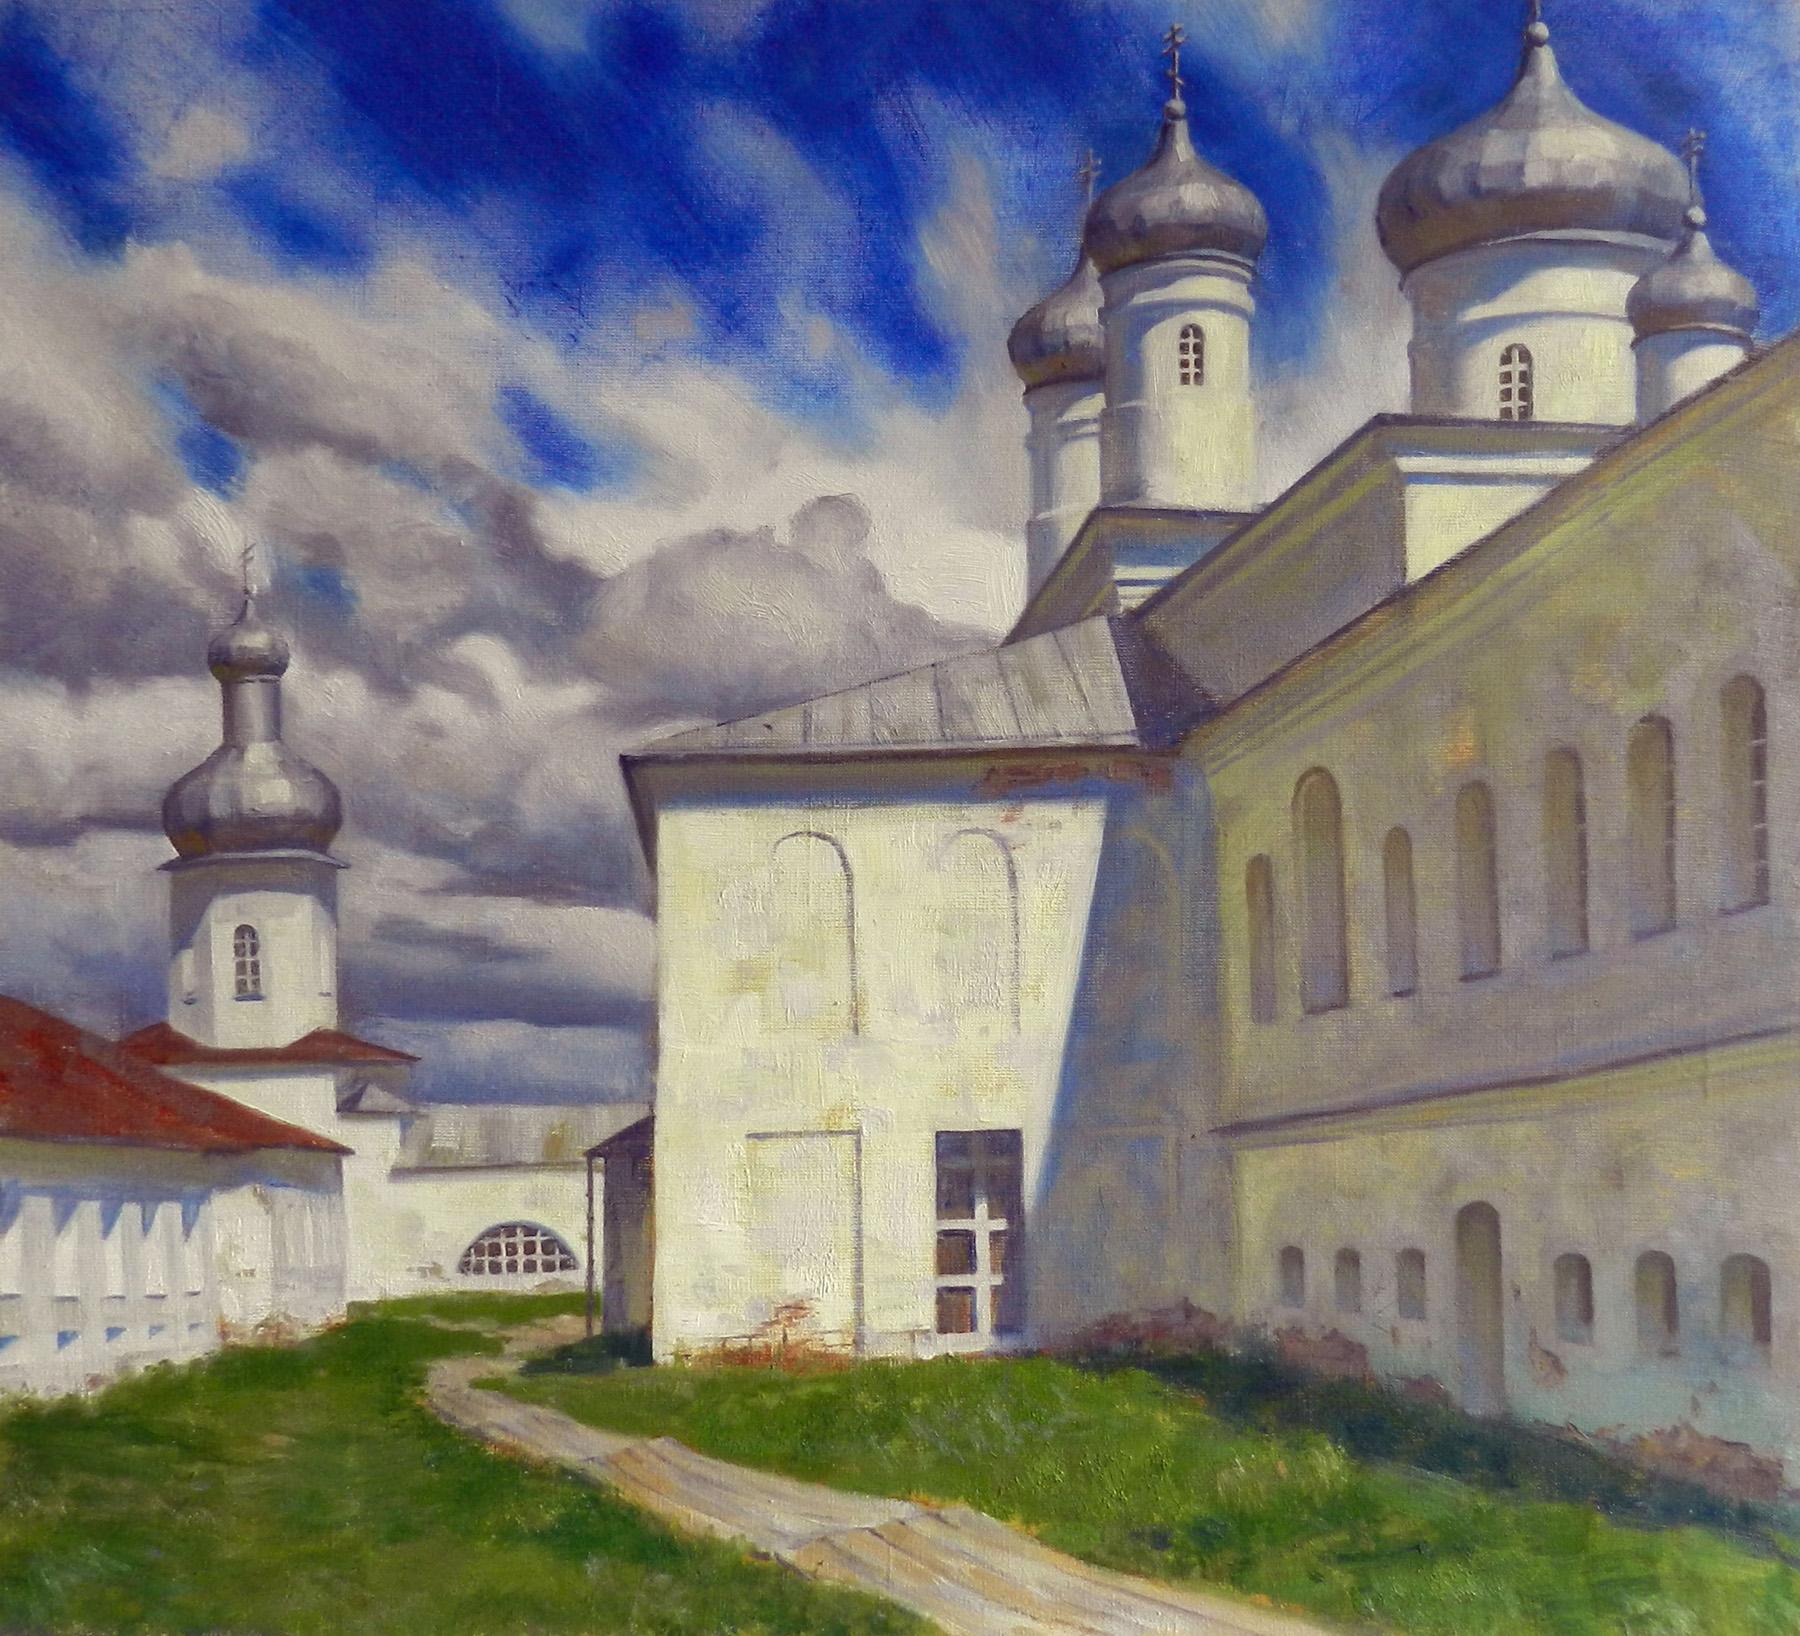 Yuriev Monastery. Original modern art painting